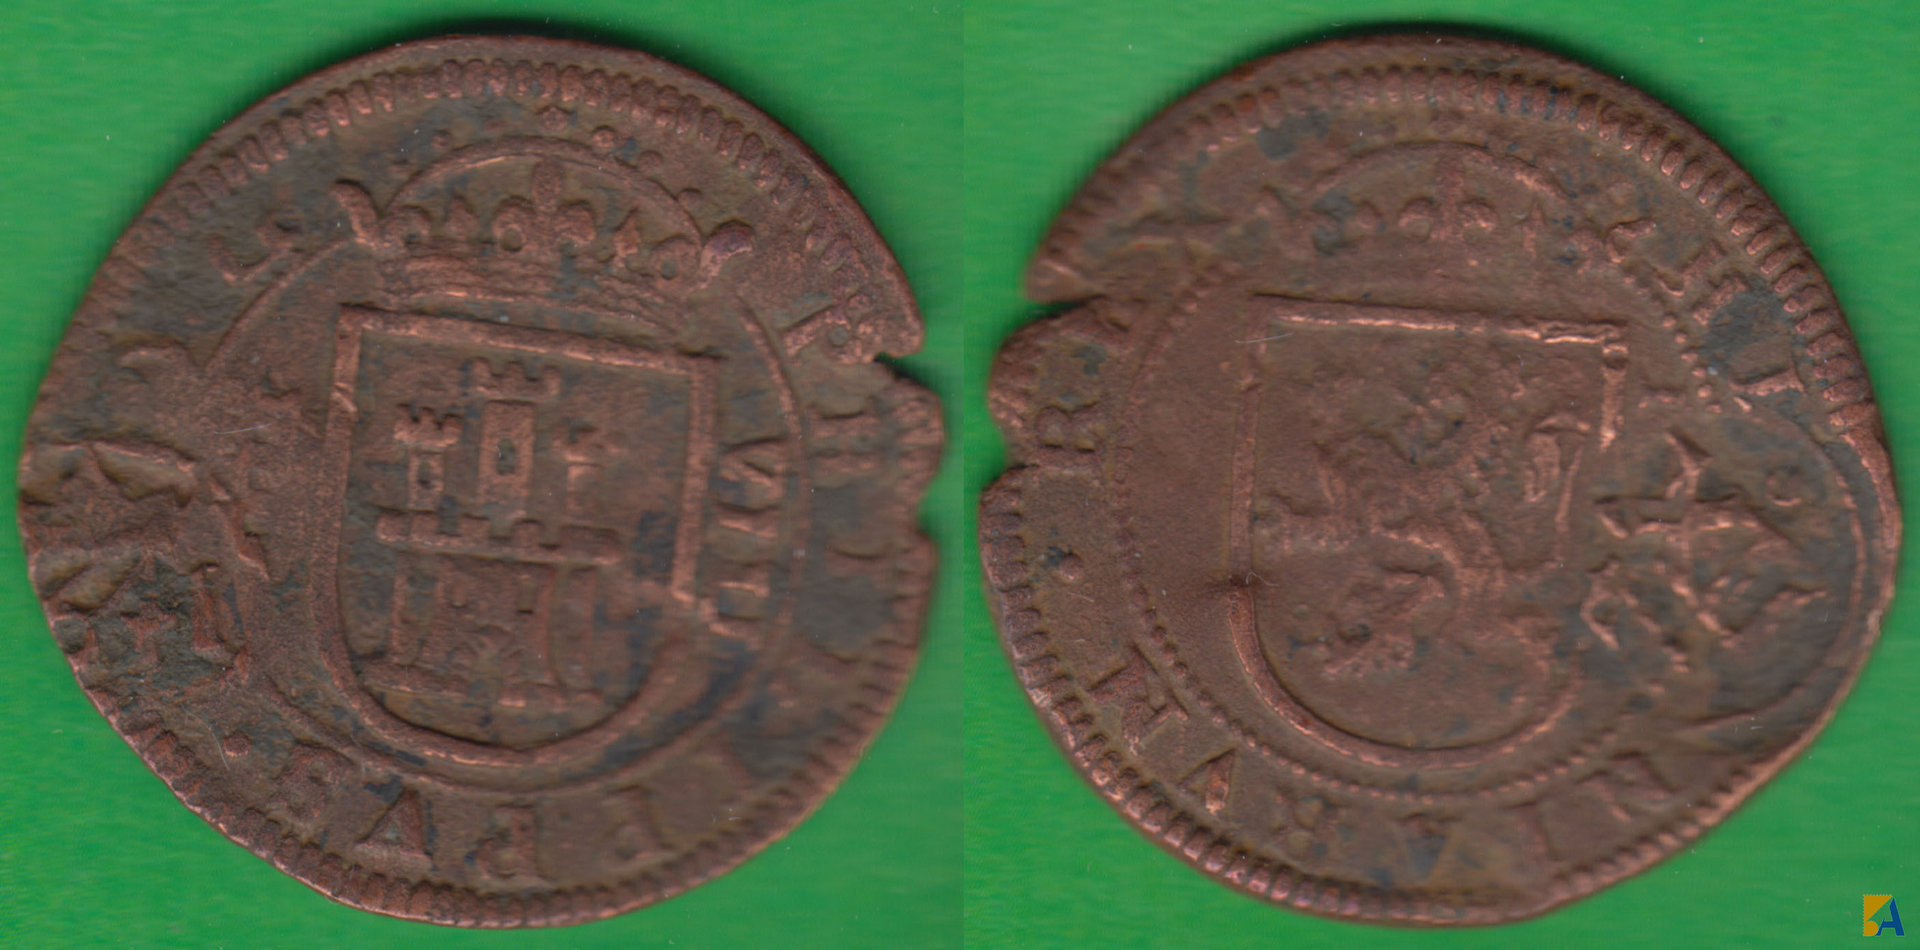 FELIPE IV. 8 MARAVEDIS DE 1621-1626. RESELLOS XII DE 1641-42.